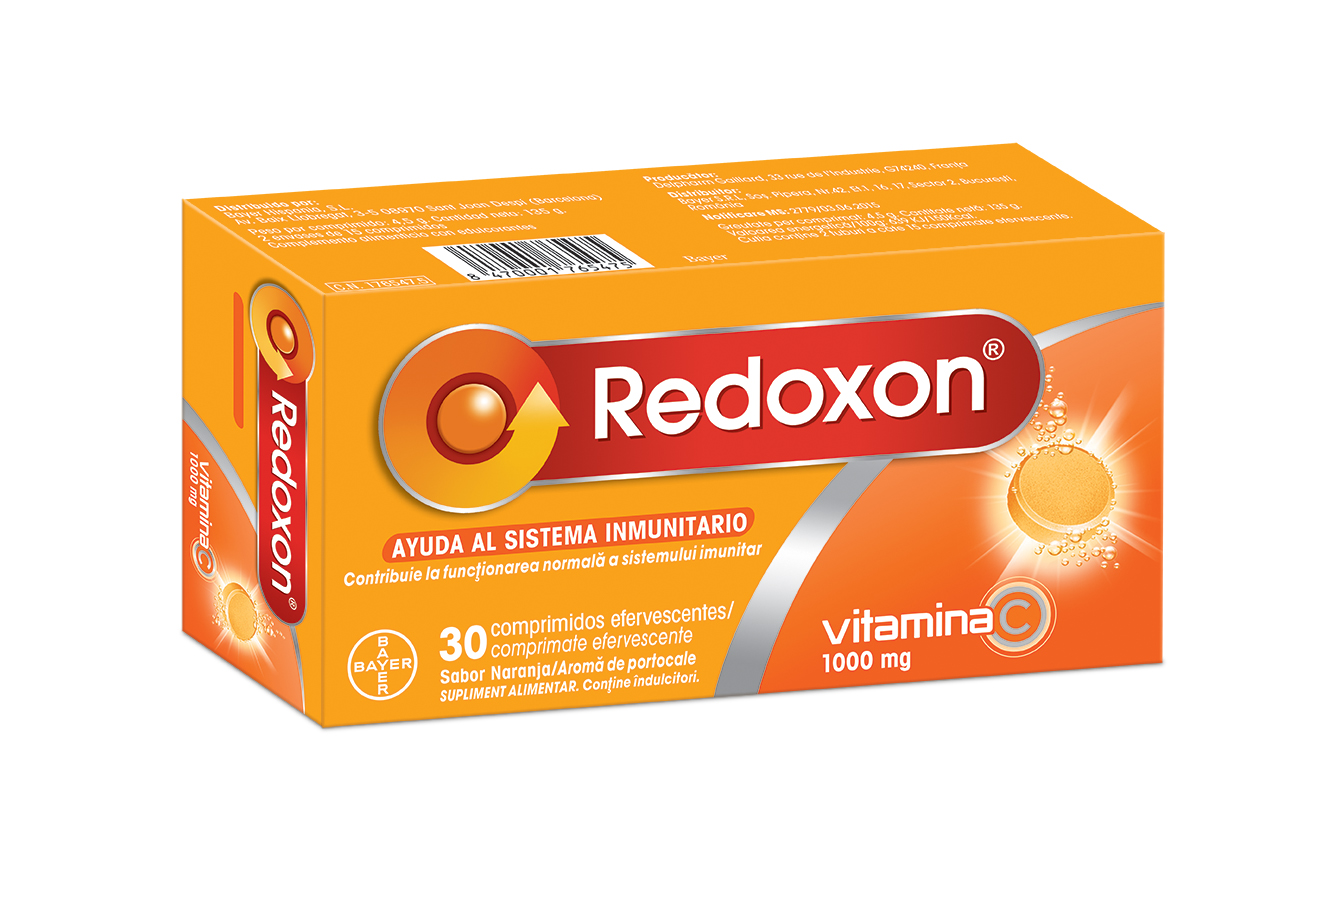 Redoxon vitamina C 1000 mg aroma de portocale, 30 comprimate efervescente, Bayer